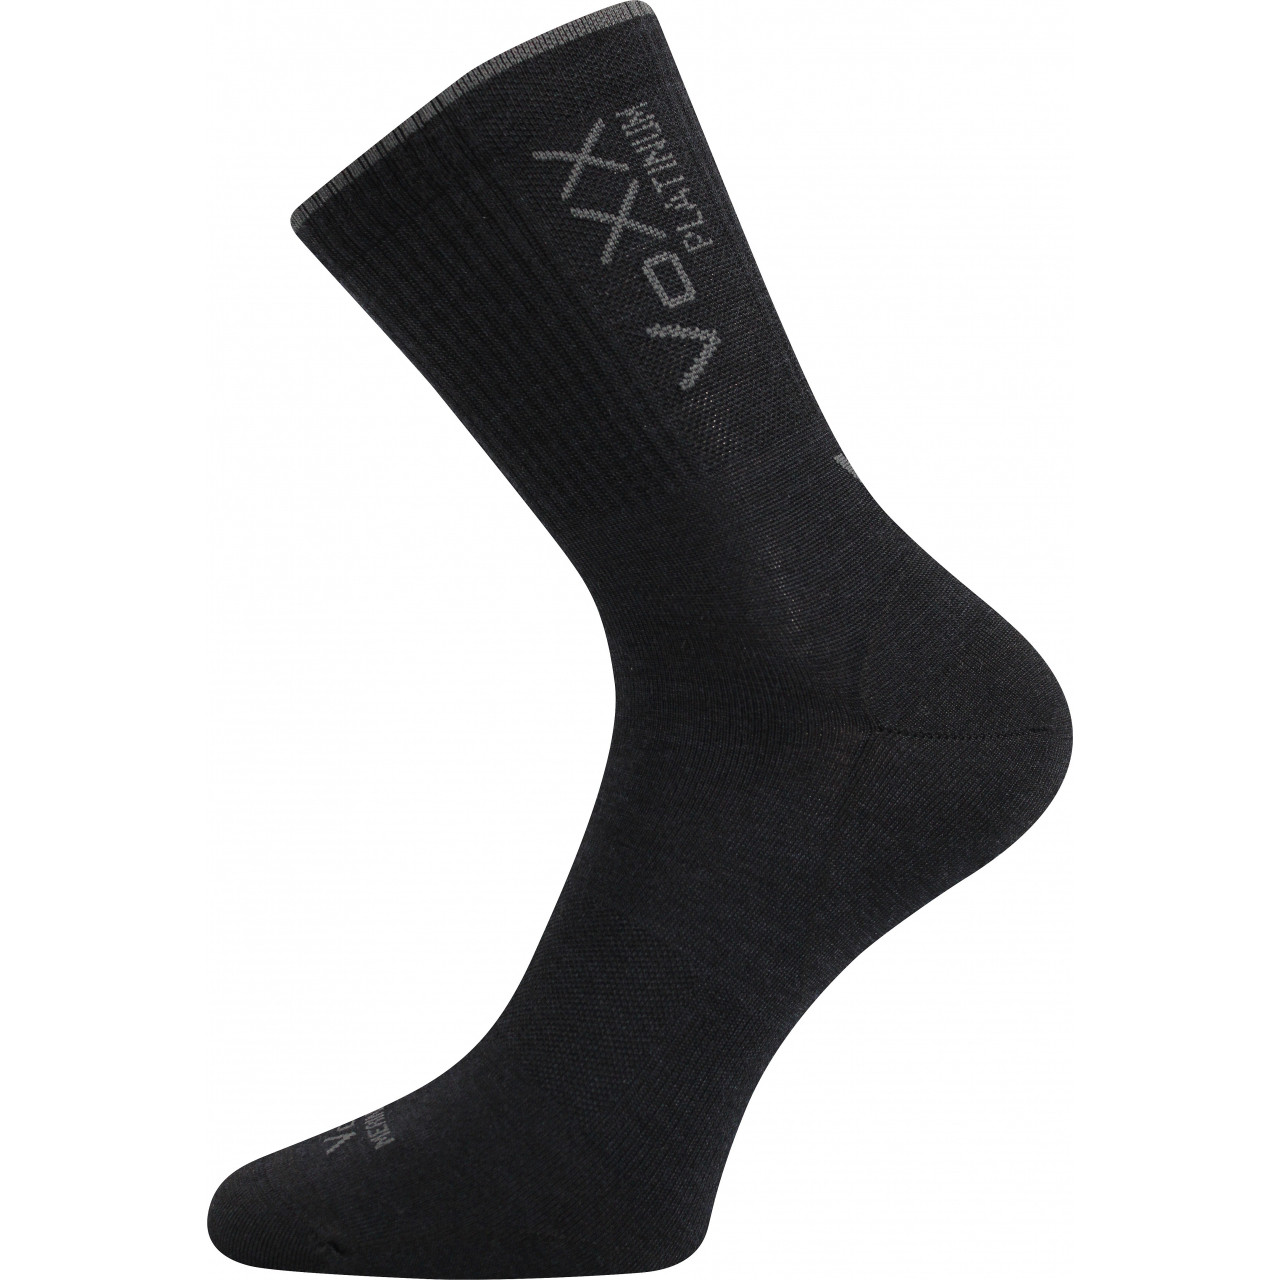 Ponožky unisex klasické Voxx Radius - černé, 43-46